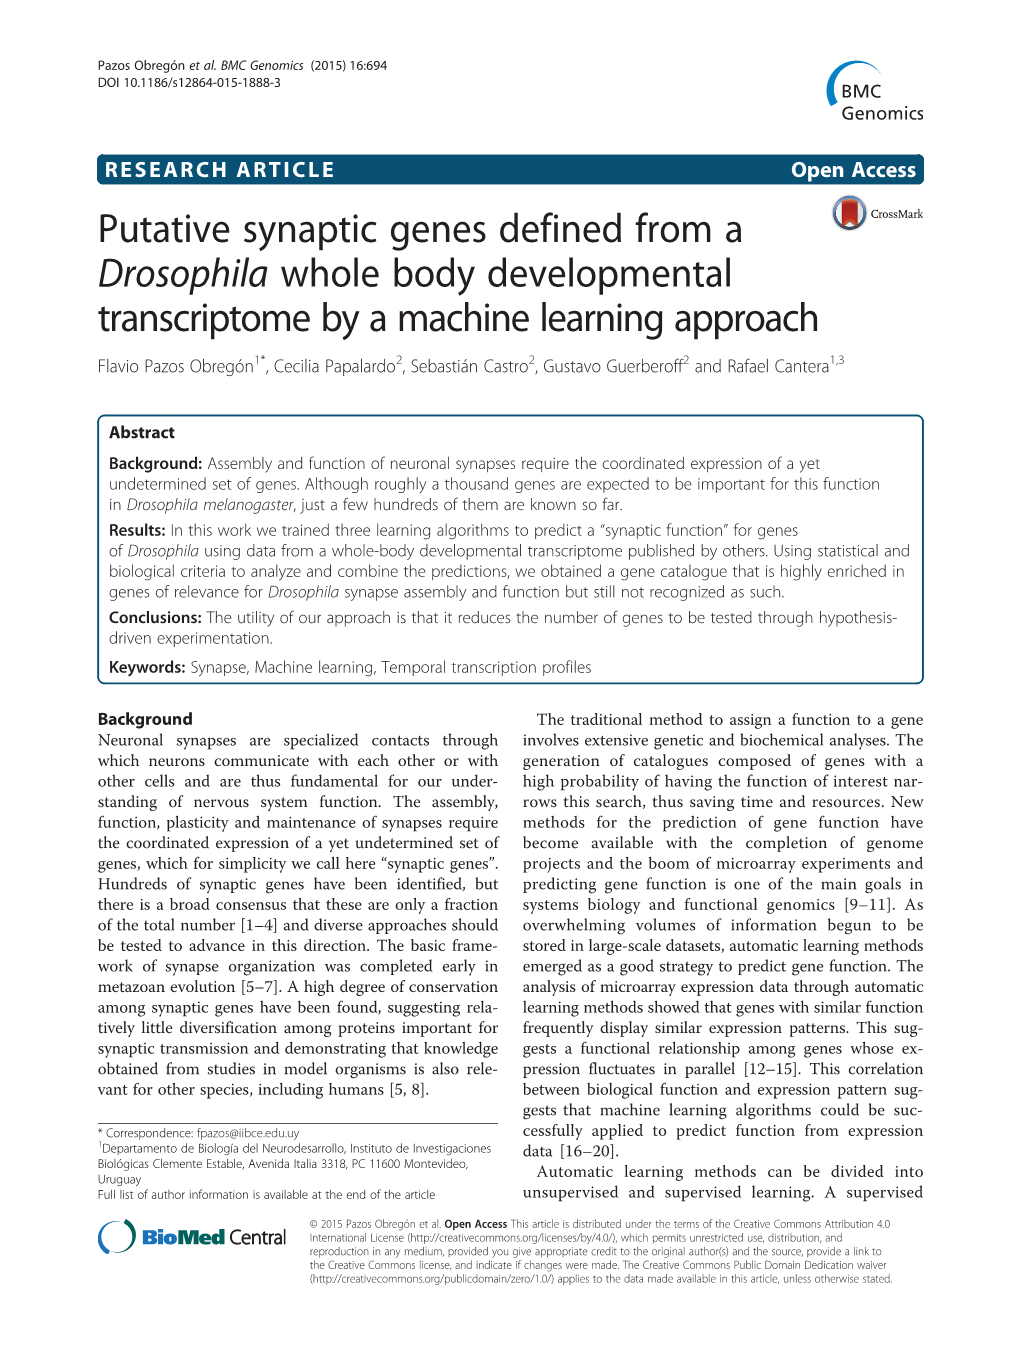 Putative Synaptic Genes Defined from a Drosophila Whole Body